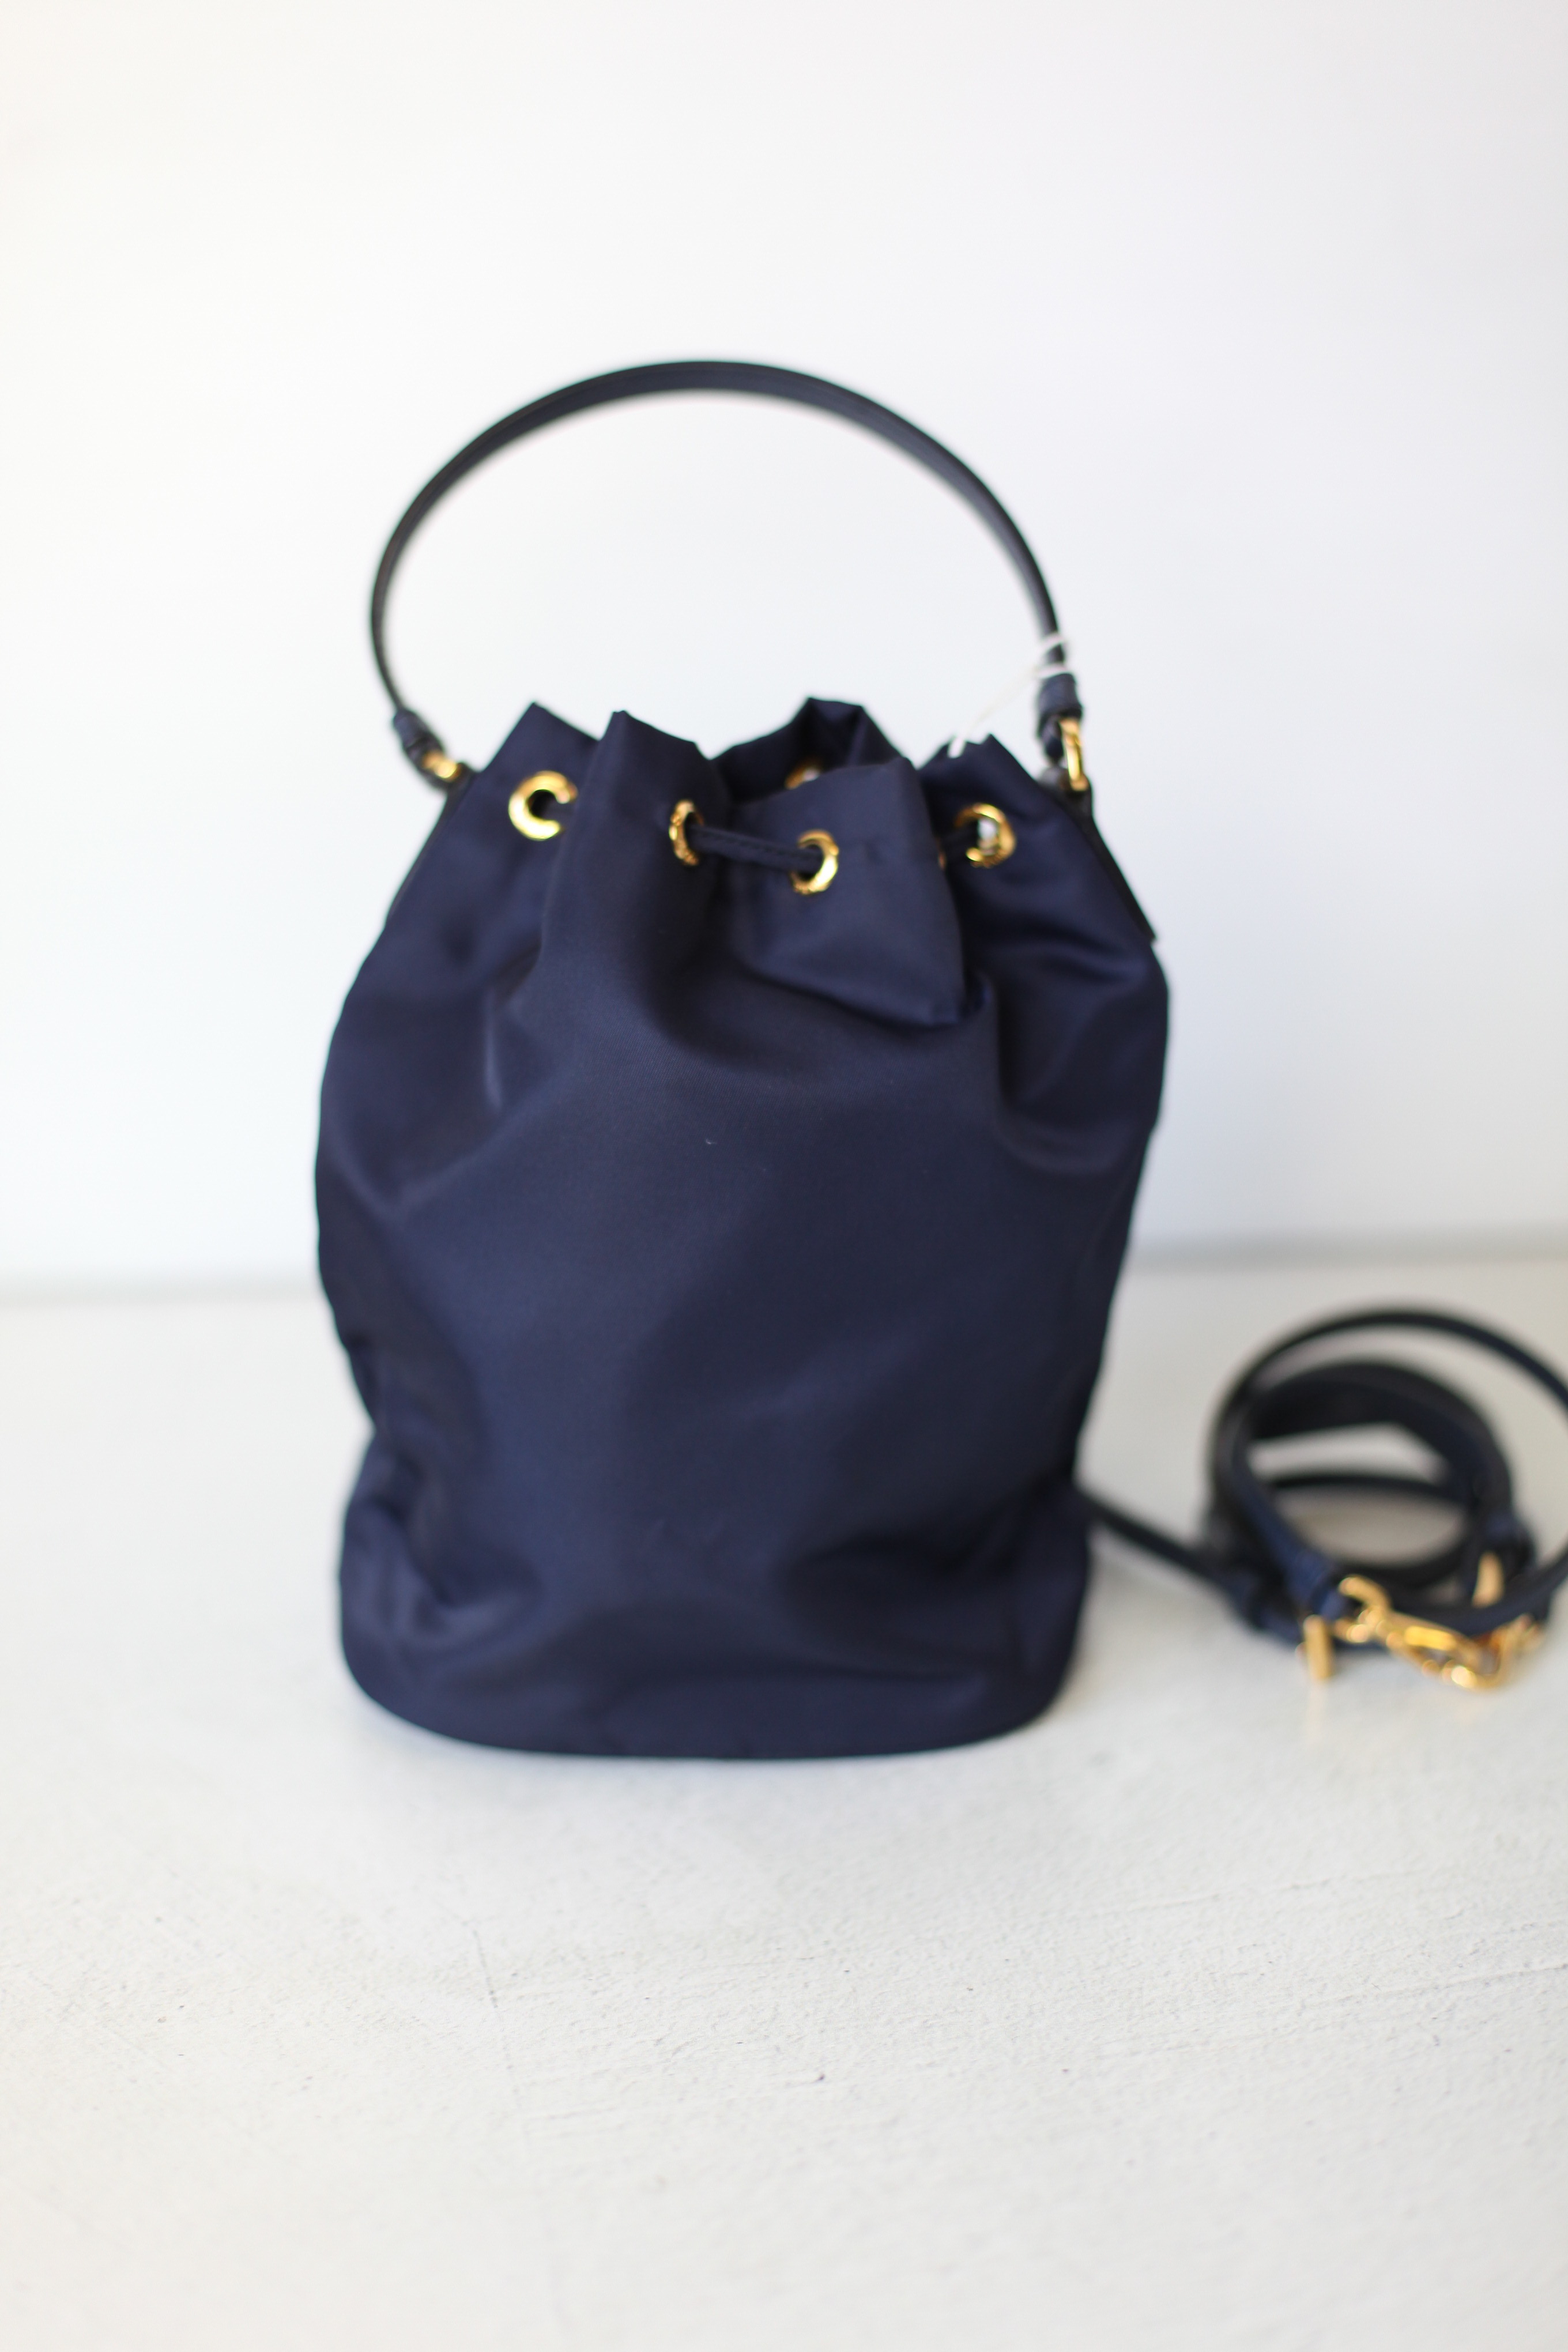 Duet Small Re Nylon Bucket Bag in Blue - Prada